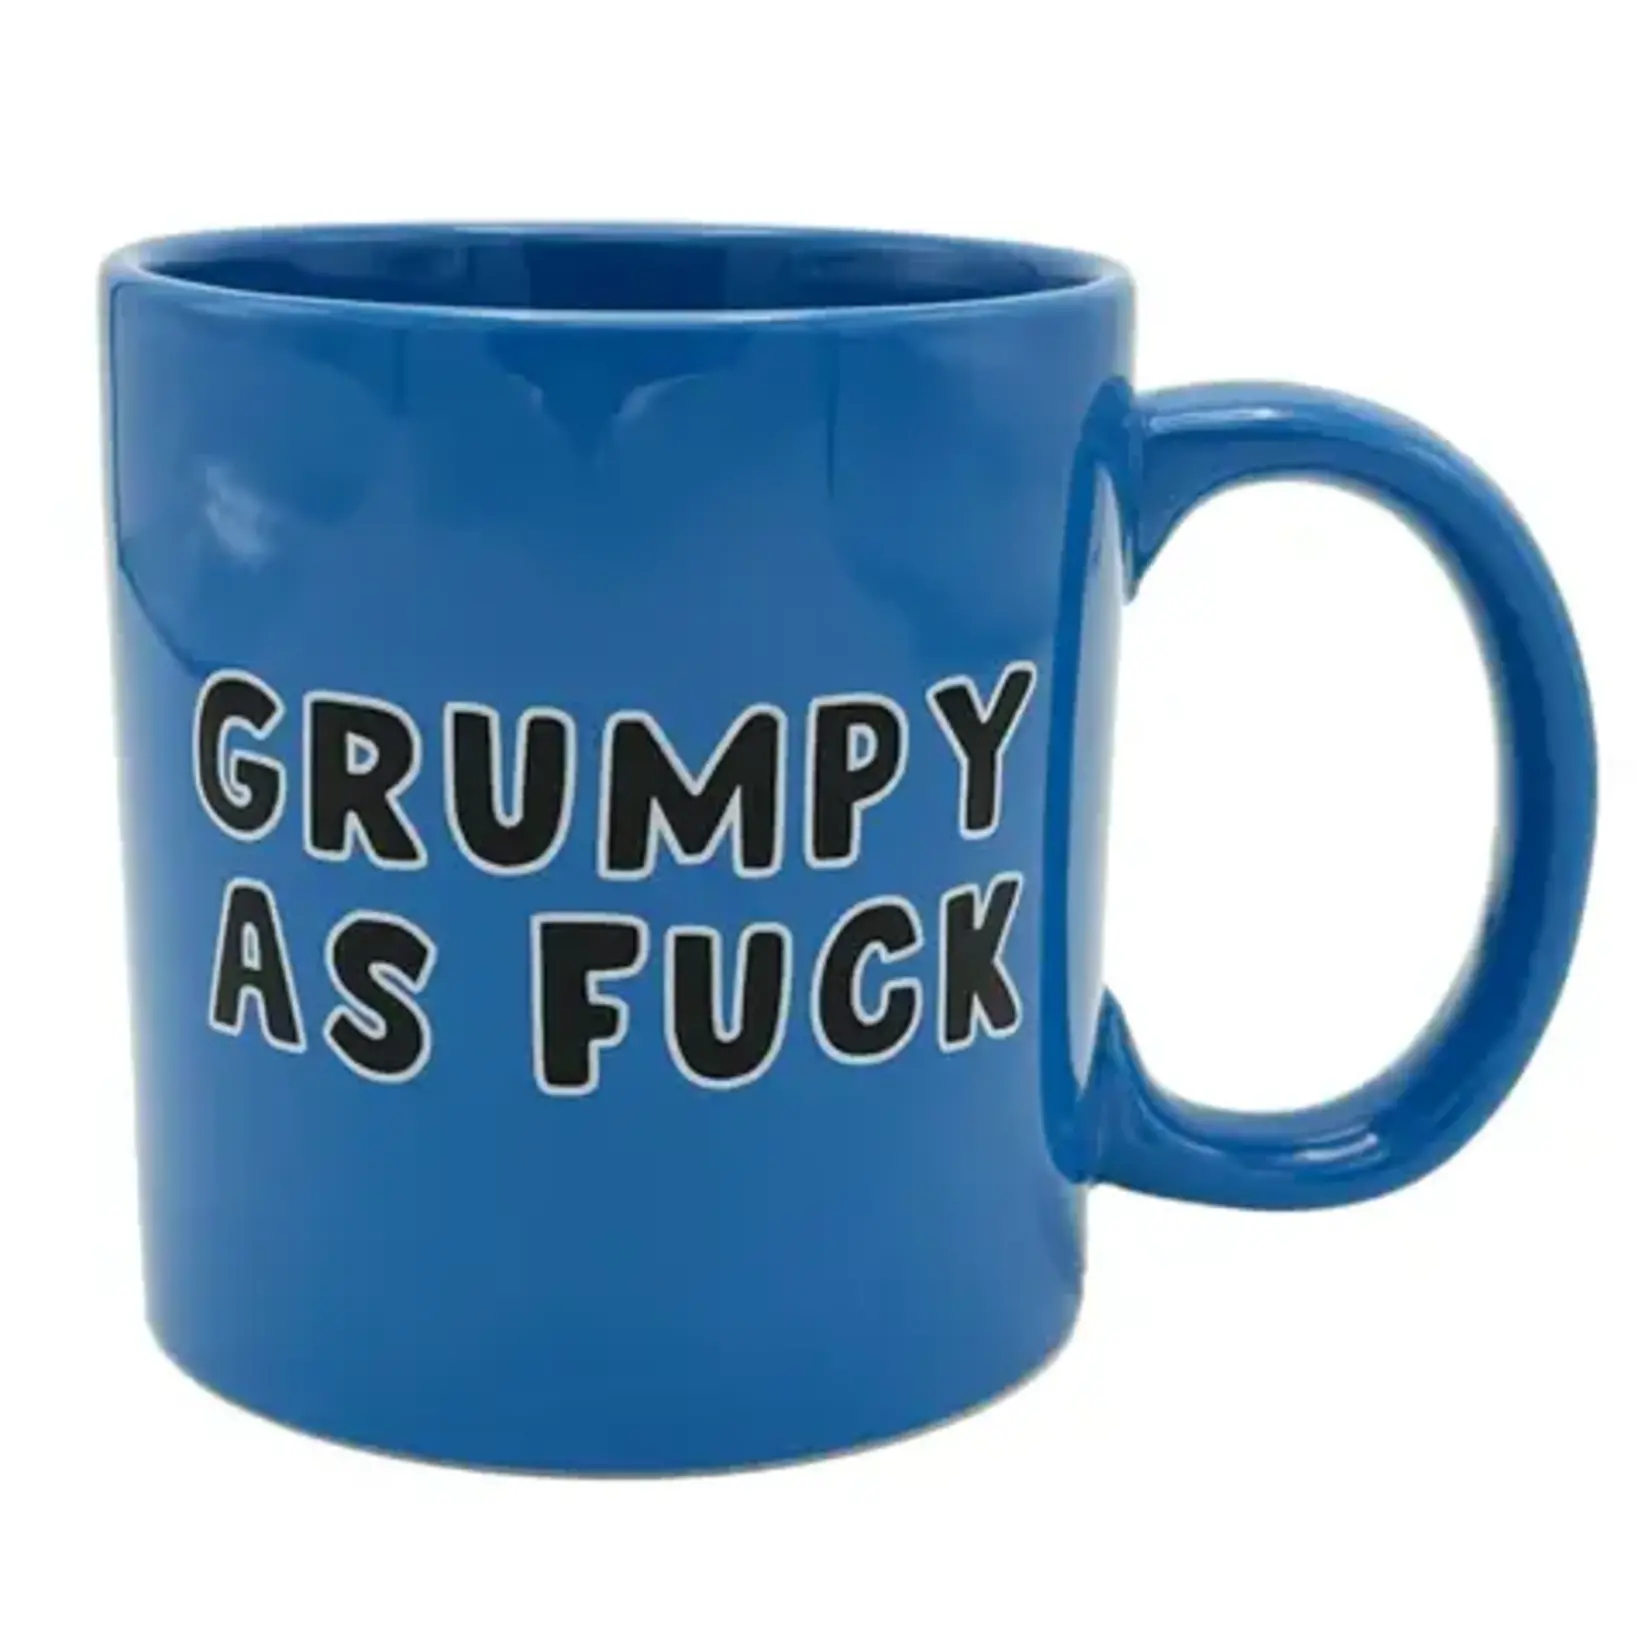 Giant Mug - Grumpy As Fuck